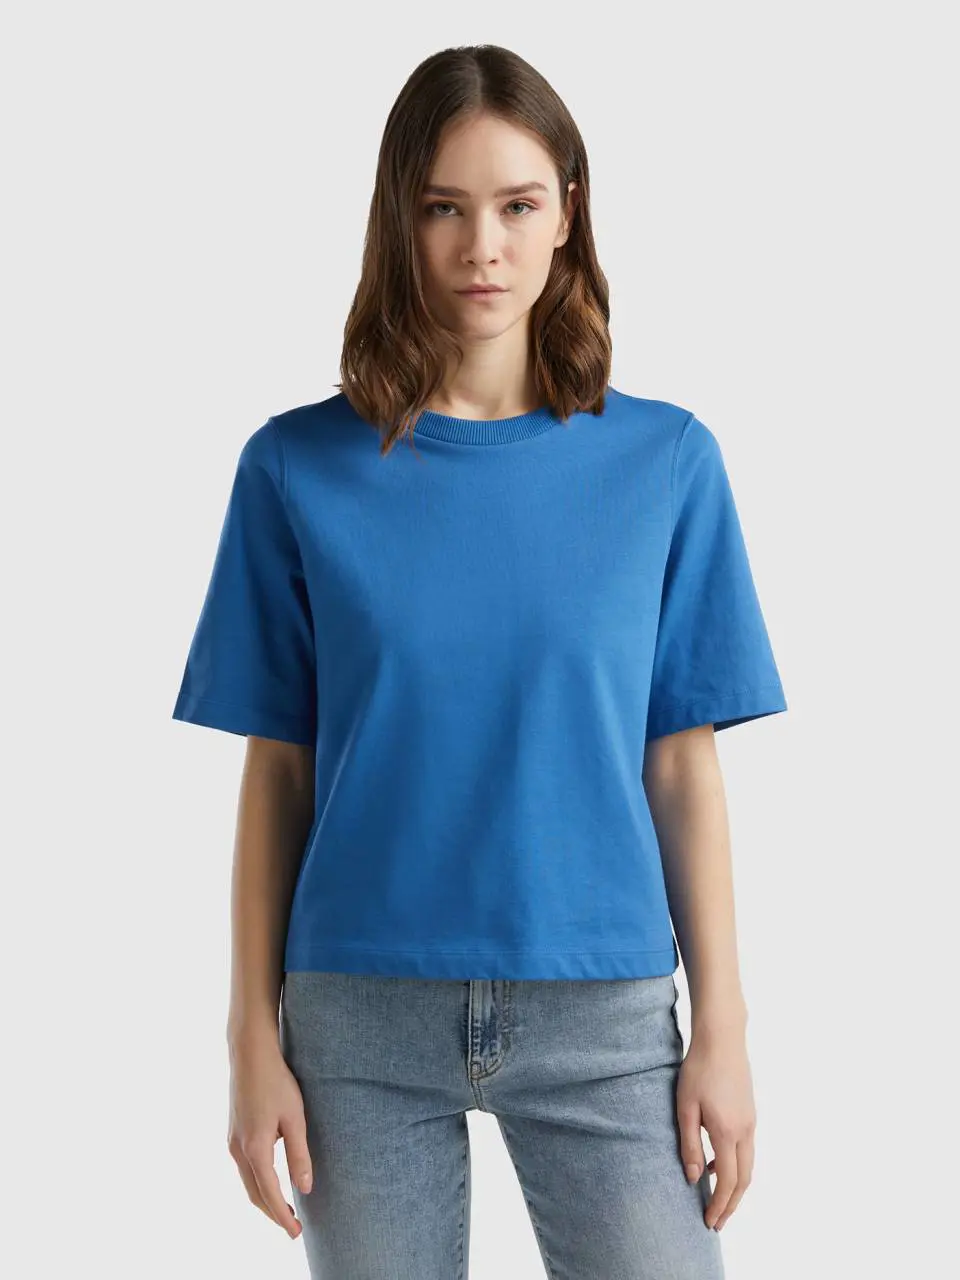 Benetton 100% cotton boxy fit t-shirt. 1